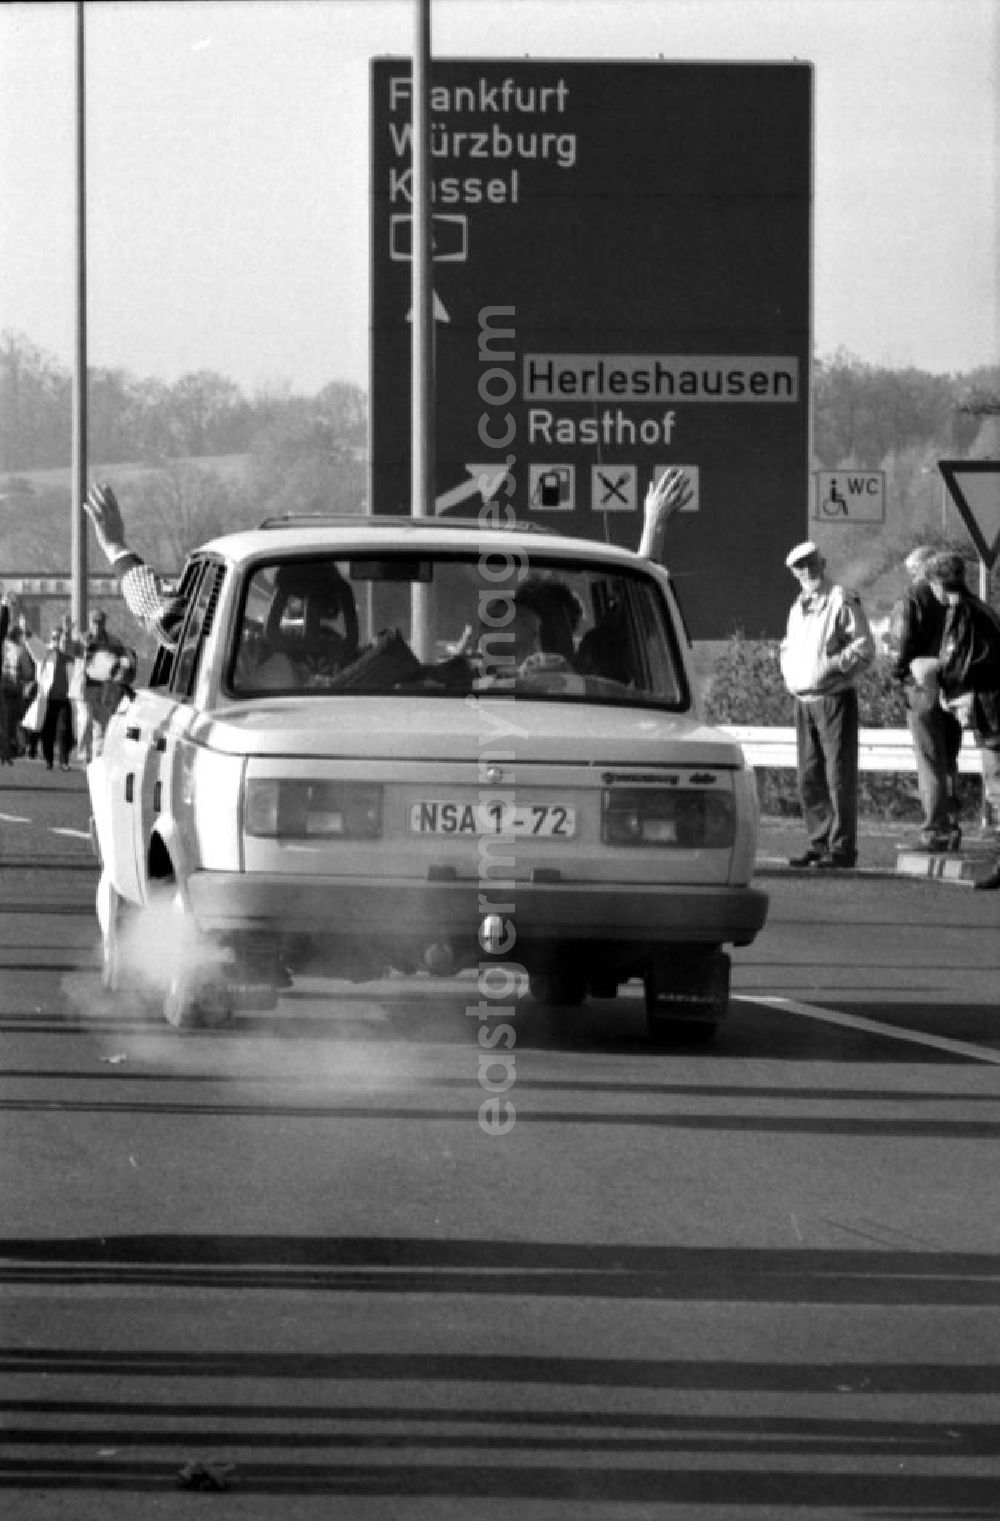 GDR picture archive: Herleshausen - Die offene Grenze am Grenzübergang DDR / BRD bei Herleshausen am 11. November 1989